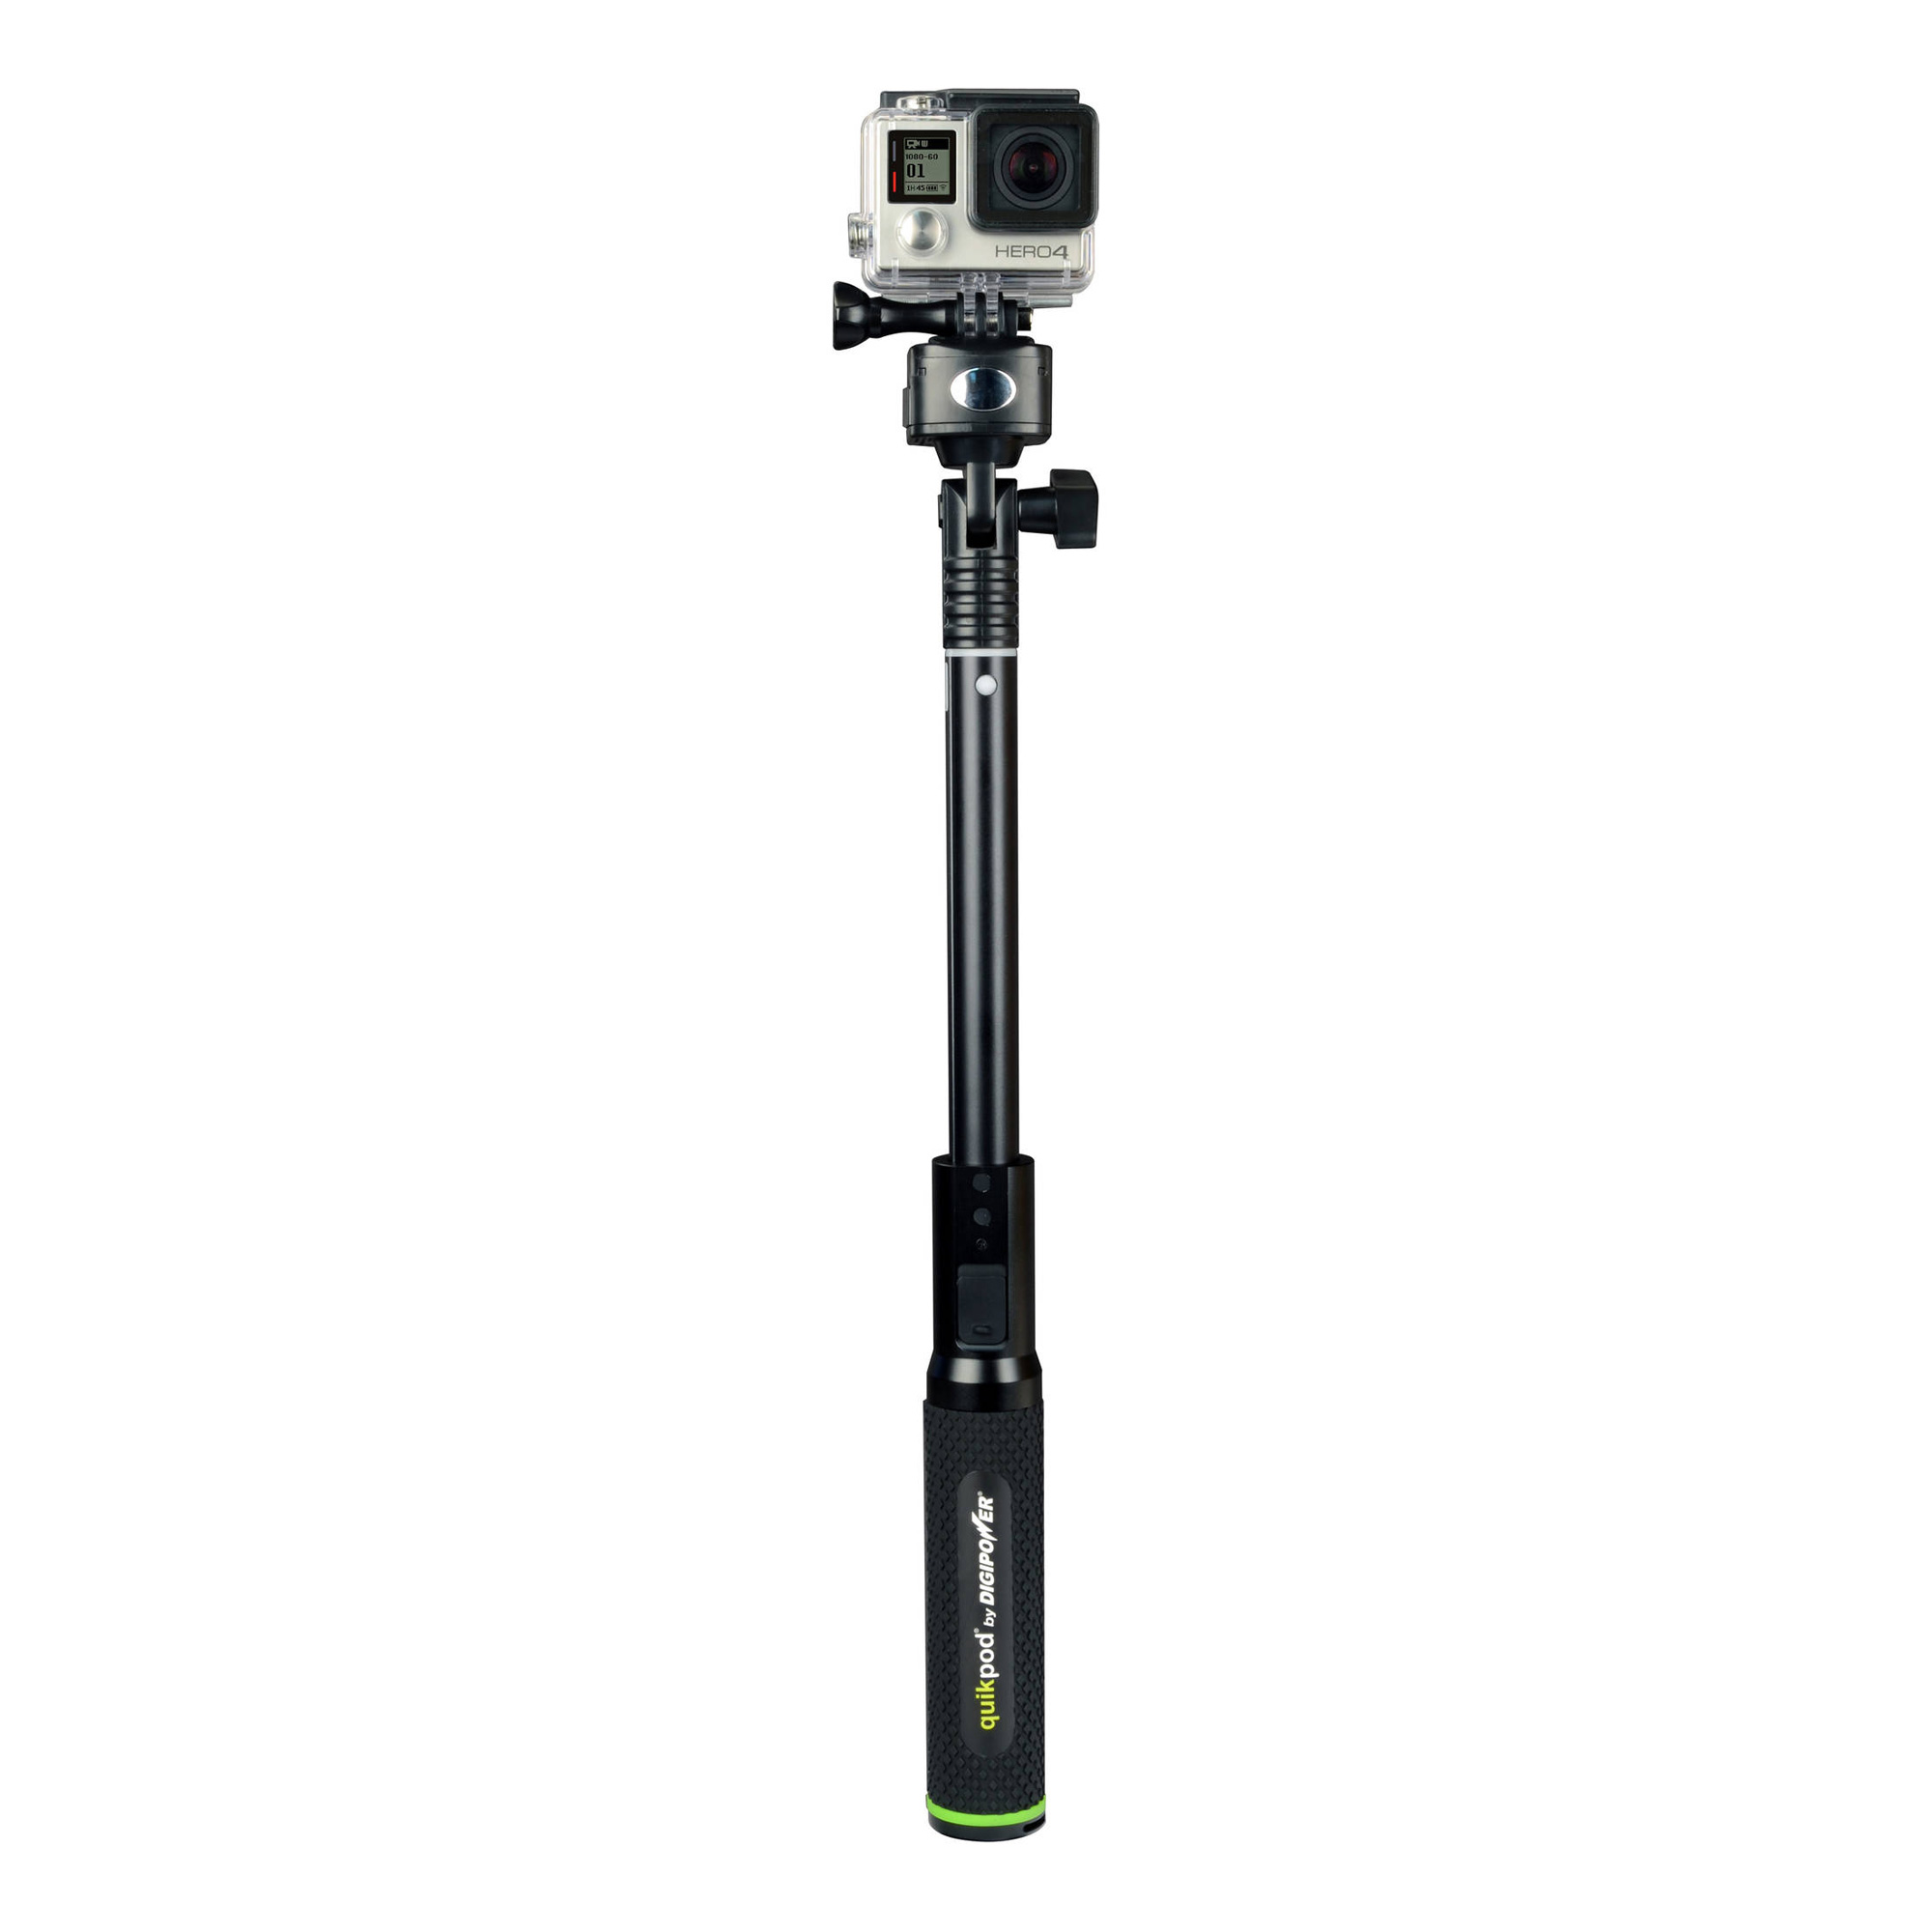 Re-Fuel QuickPod Selfie Stick Power Bank